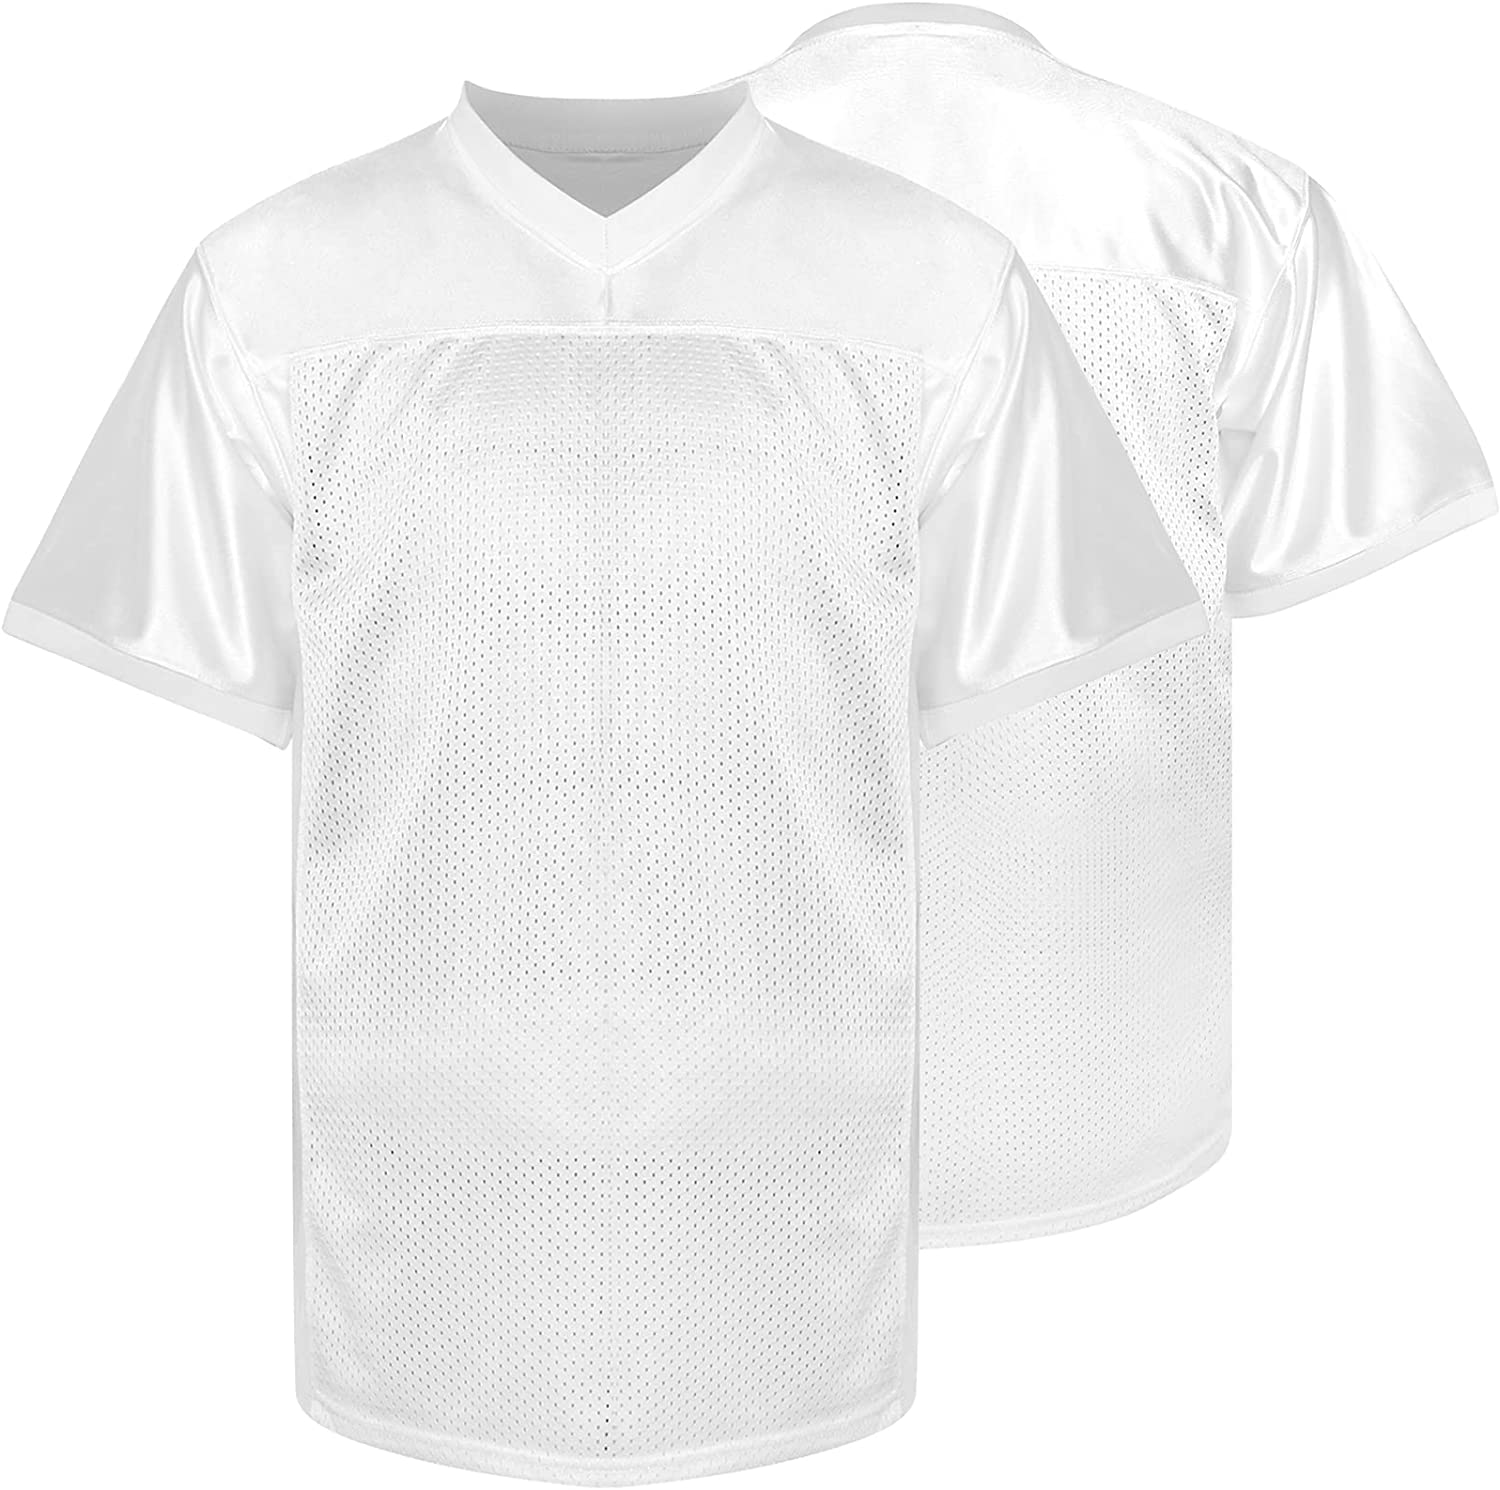 Blank Football Jersey,90s Hip Hop Sports Mesh Practice Plain Football Shirt